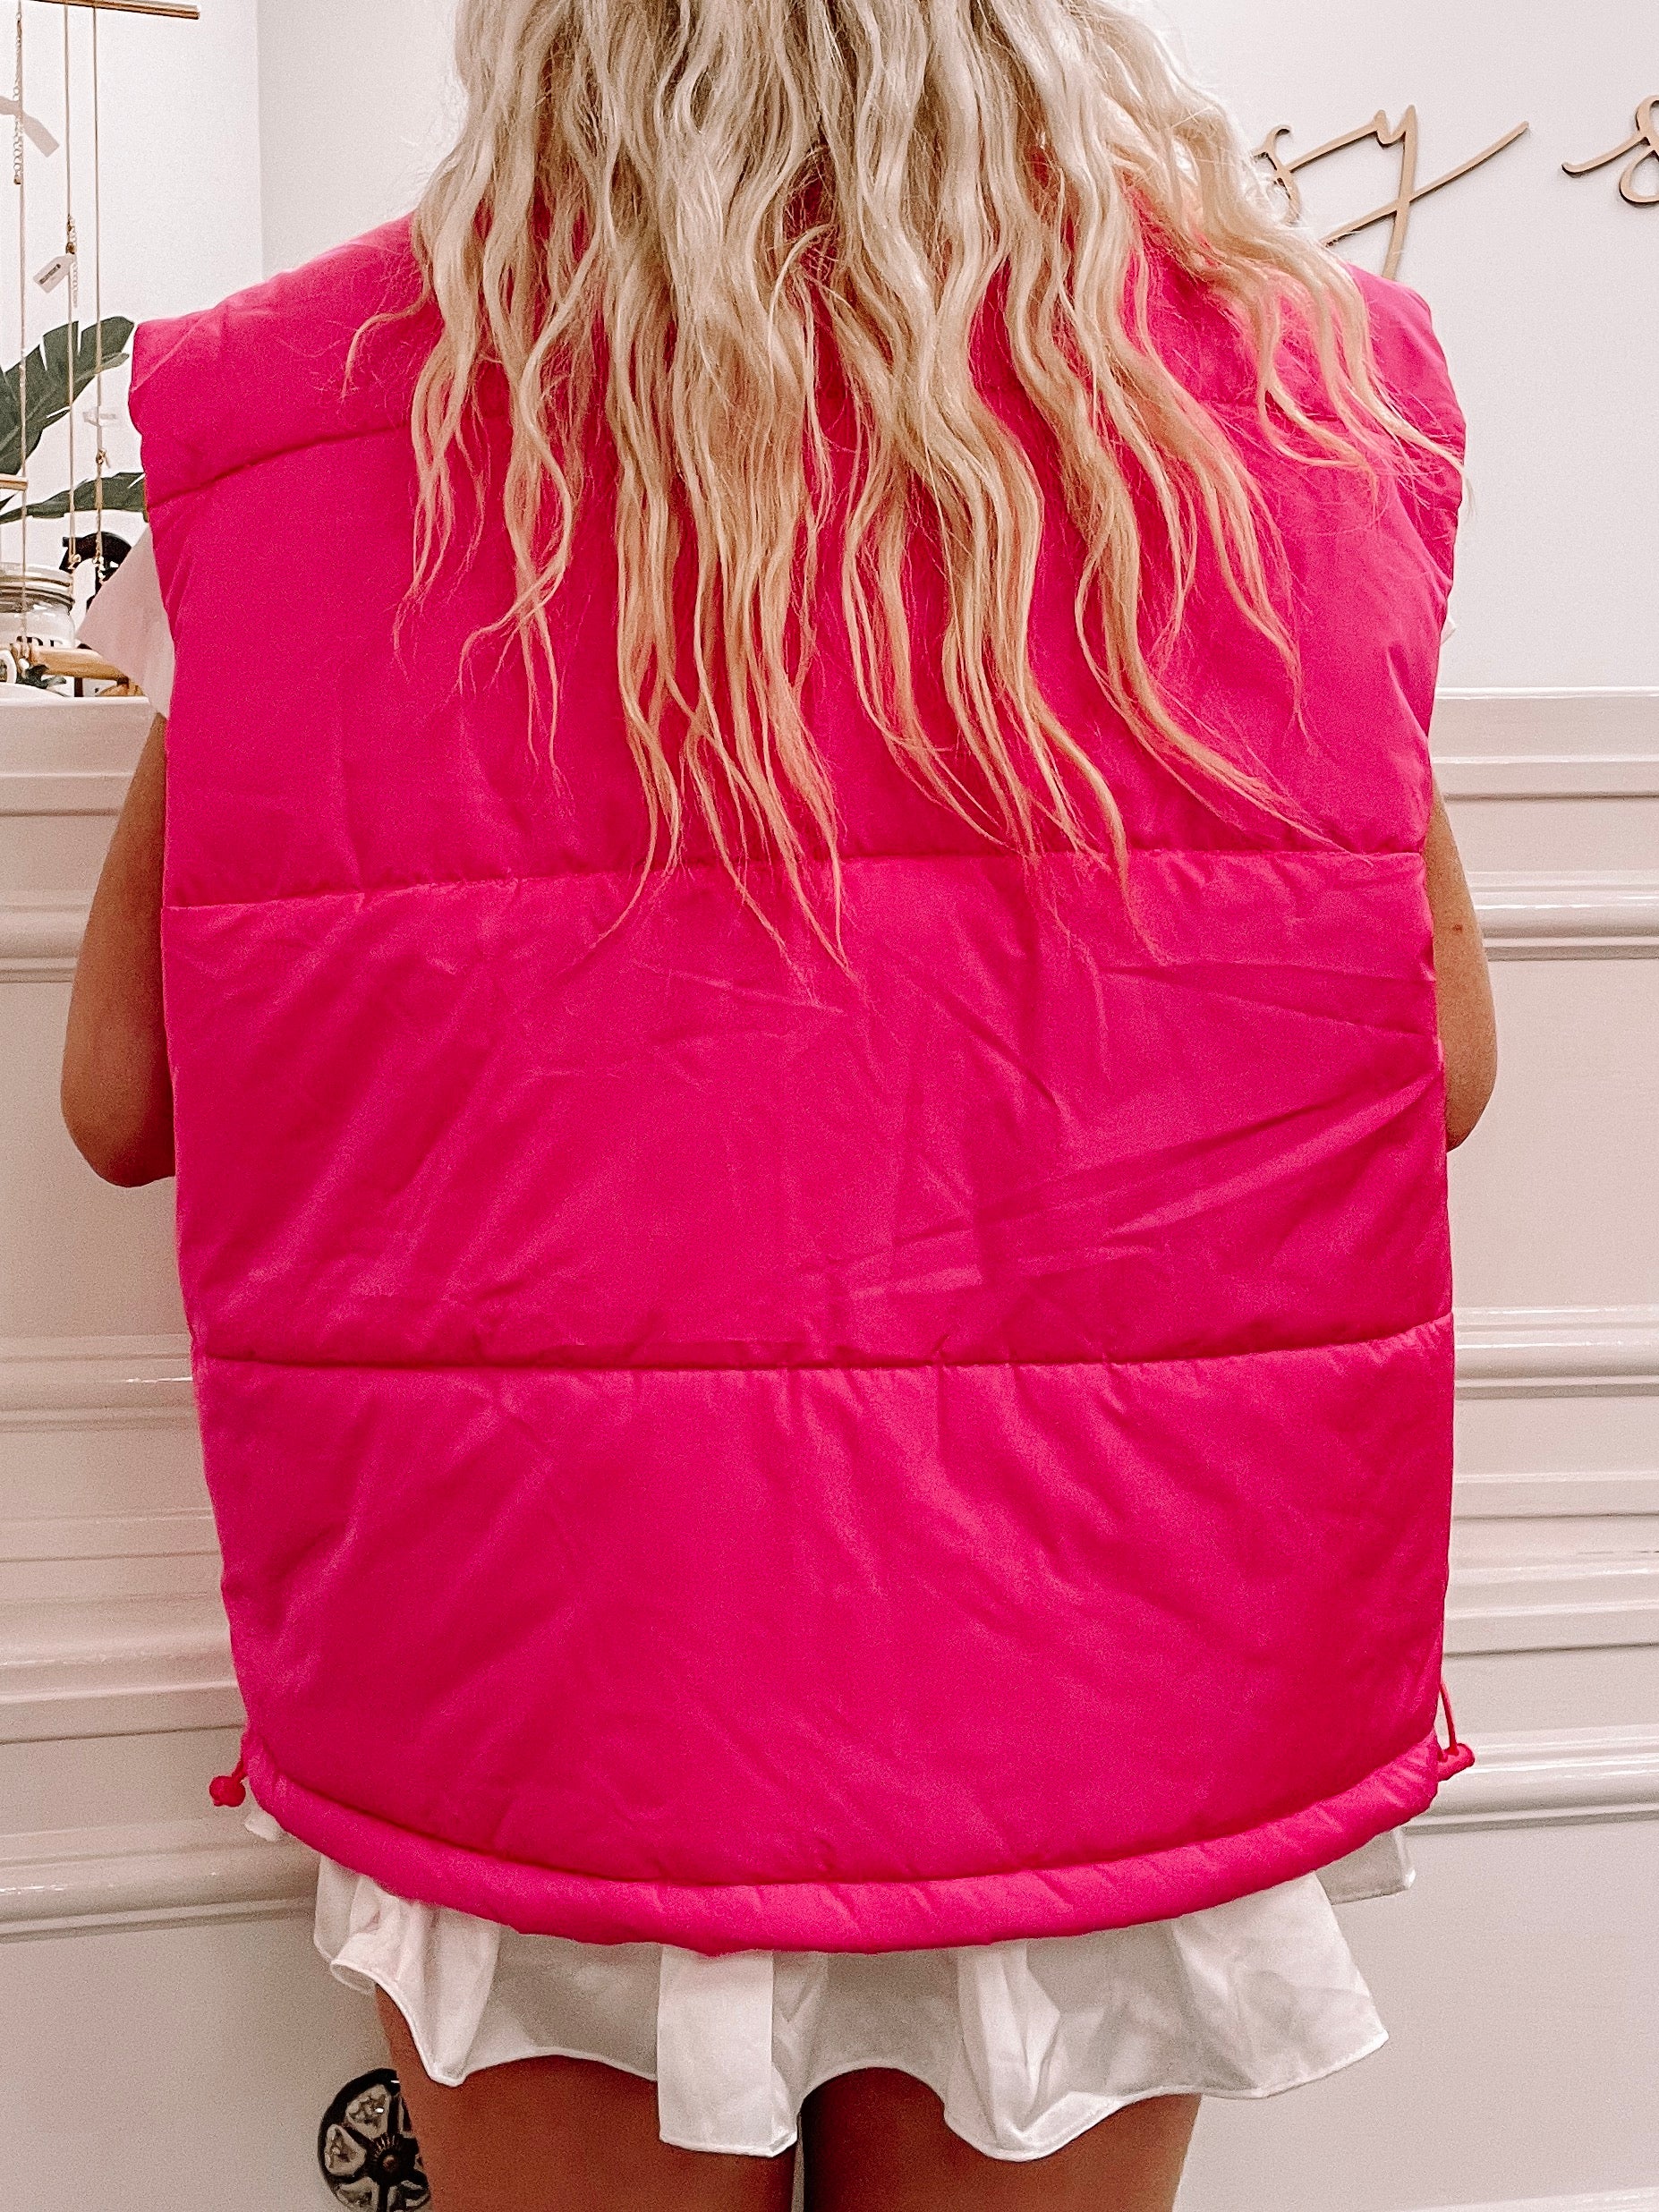 Polly Pocket Puffer Vest | sassyshortcake.com